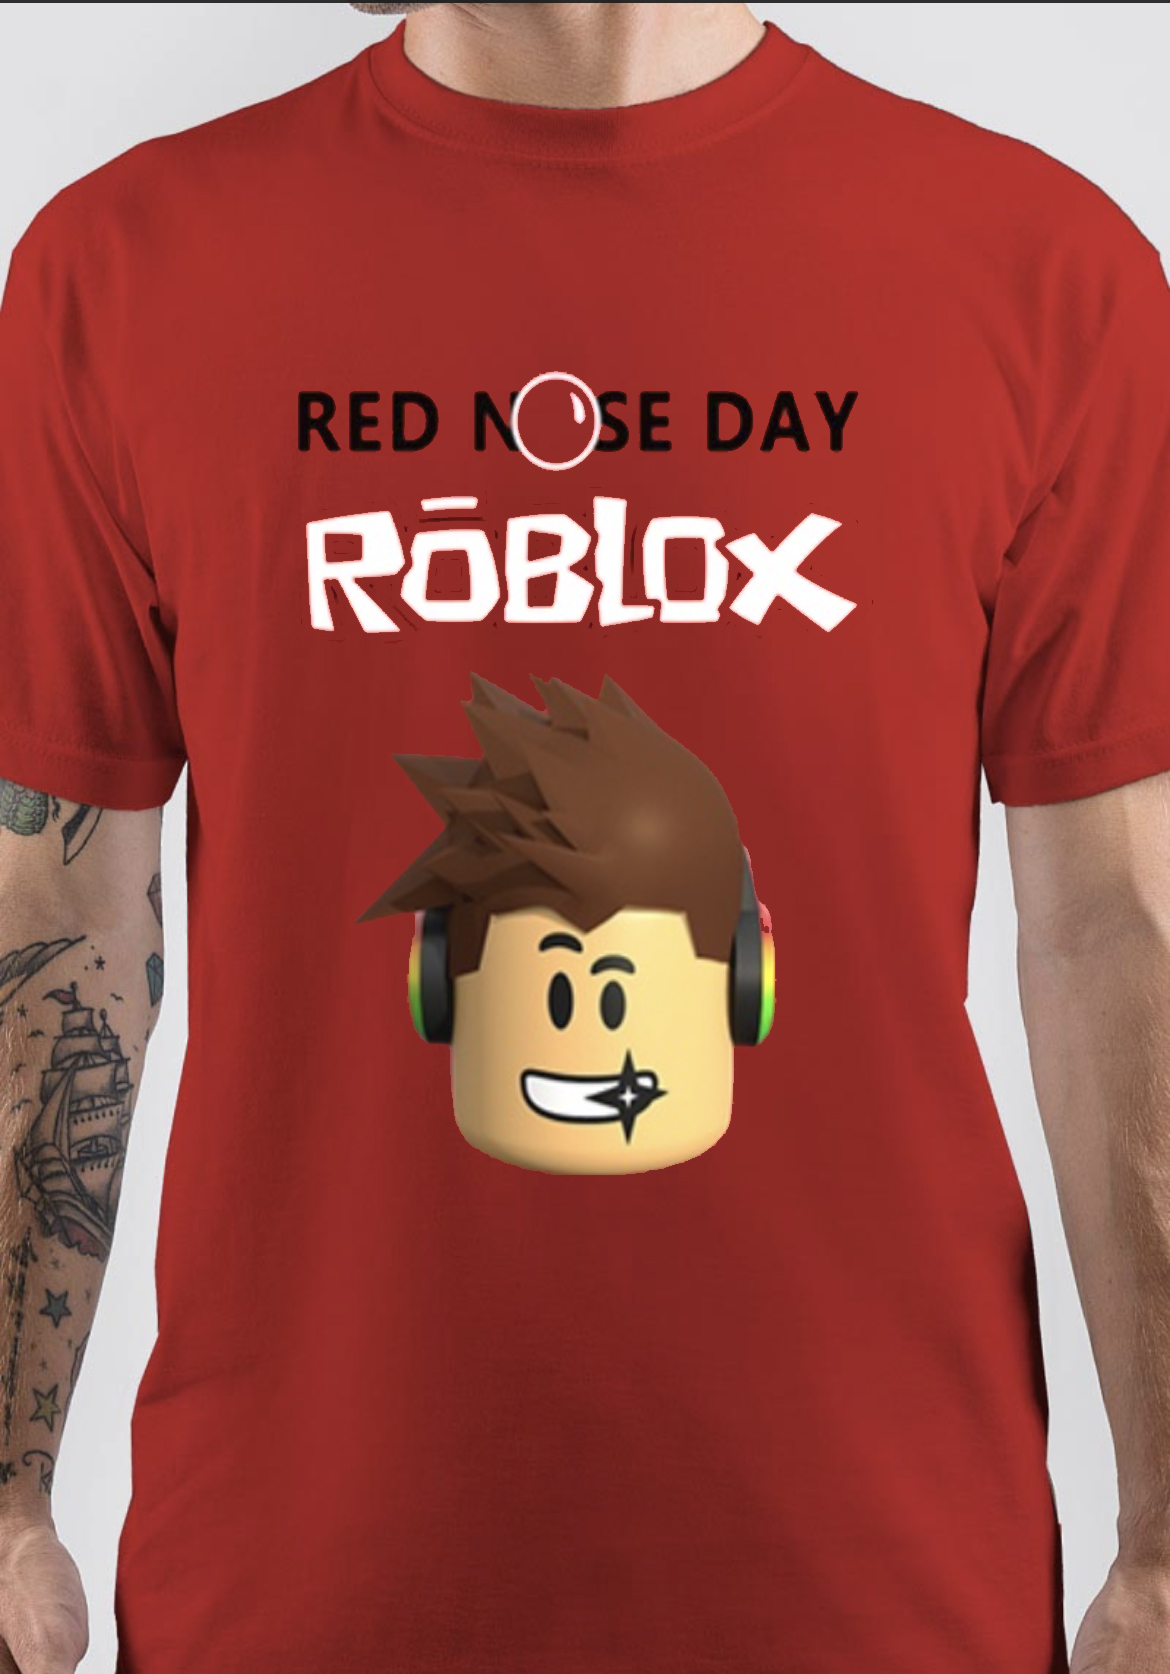 roblox-t-shirt-swag-shirts